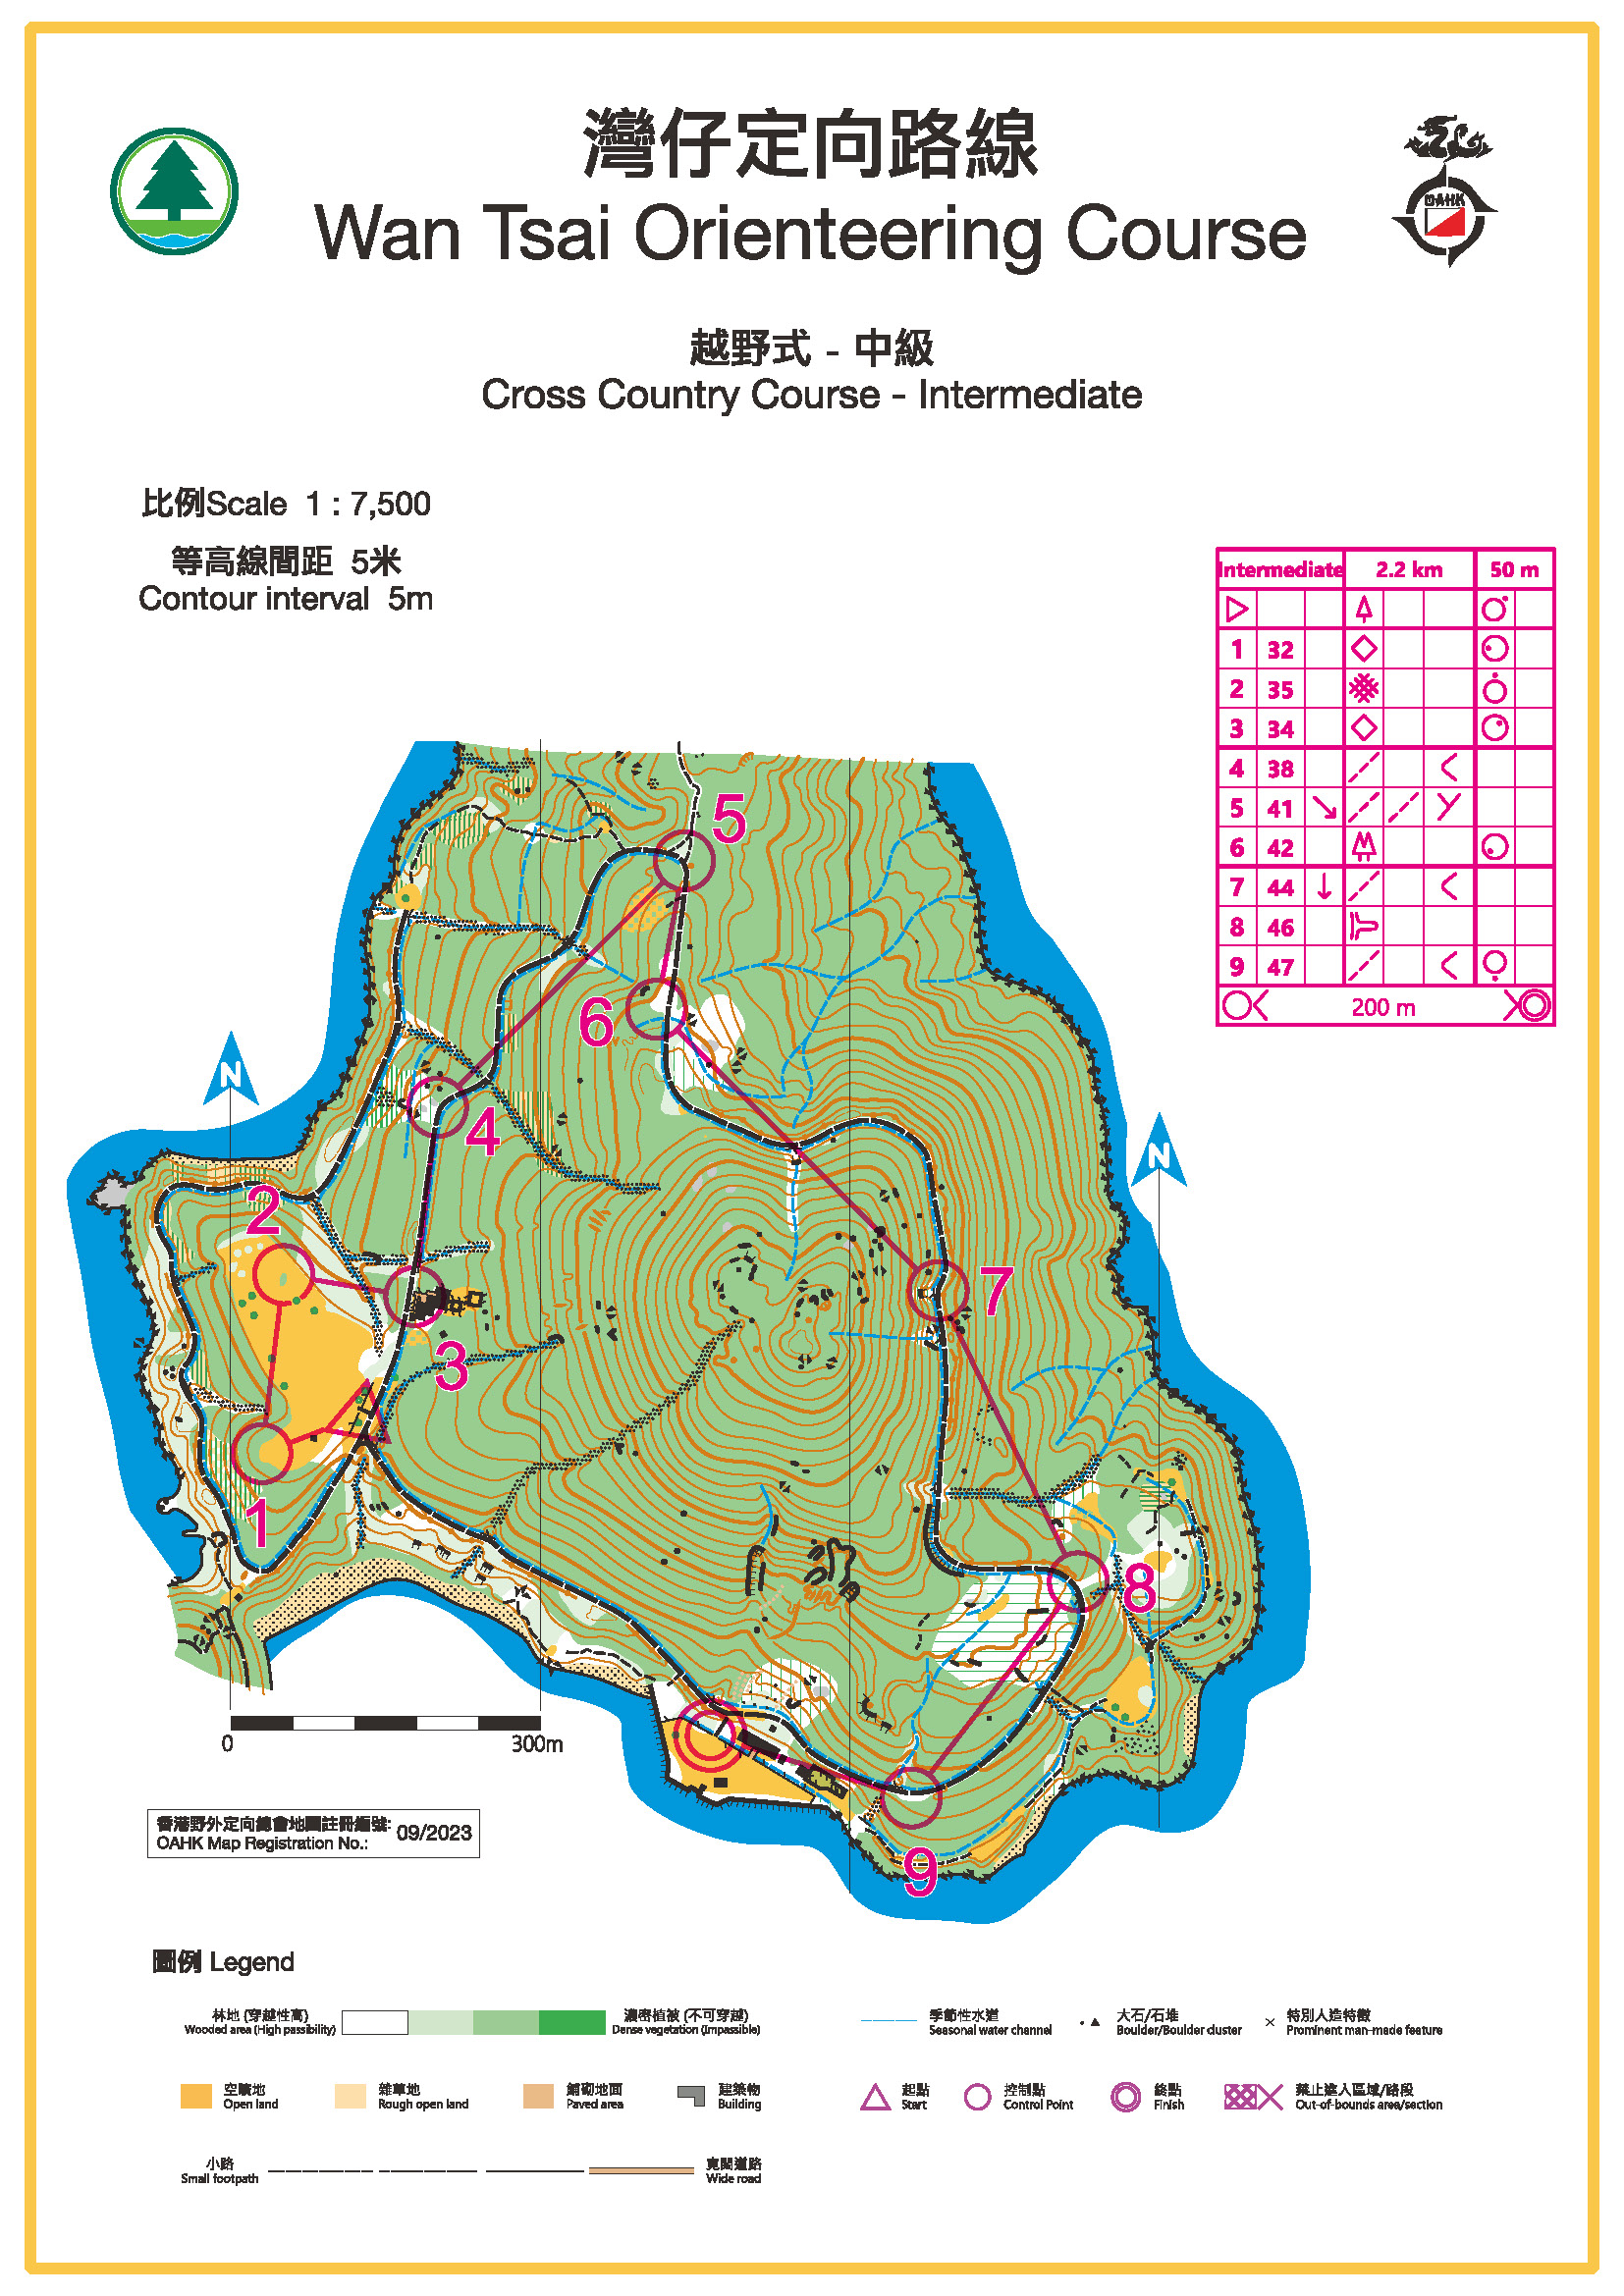 Map for Wan Tsai Orienteering Course - Intermediate